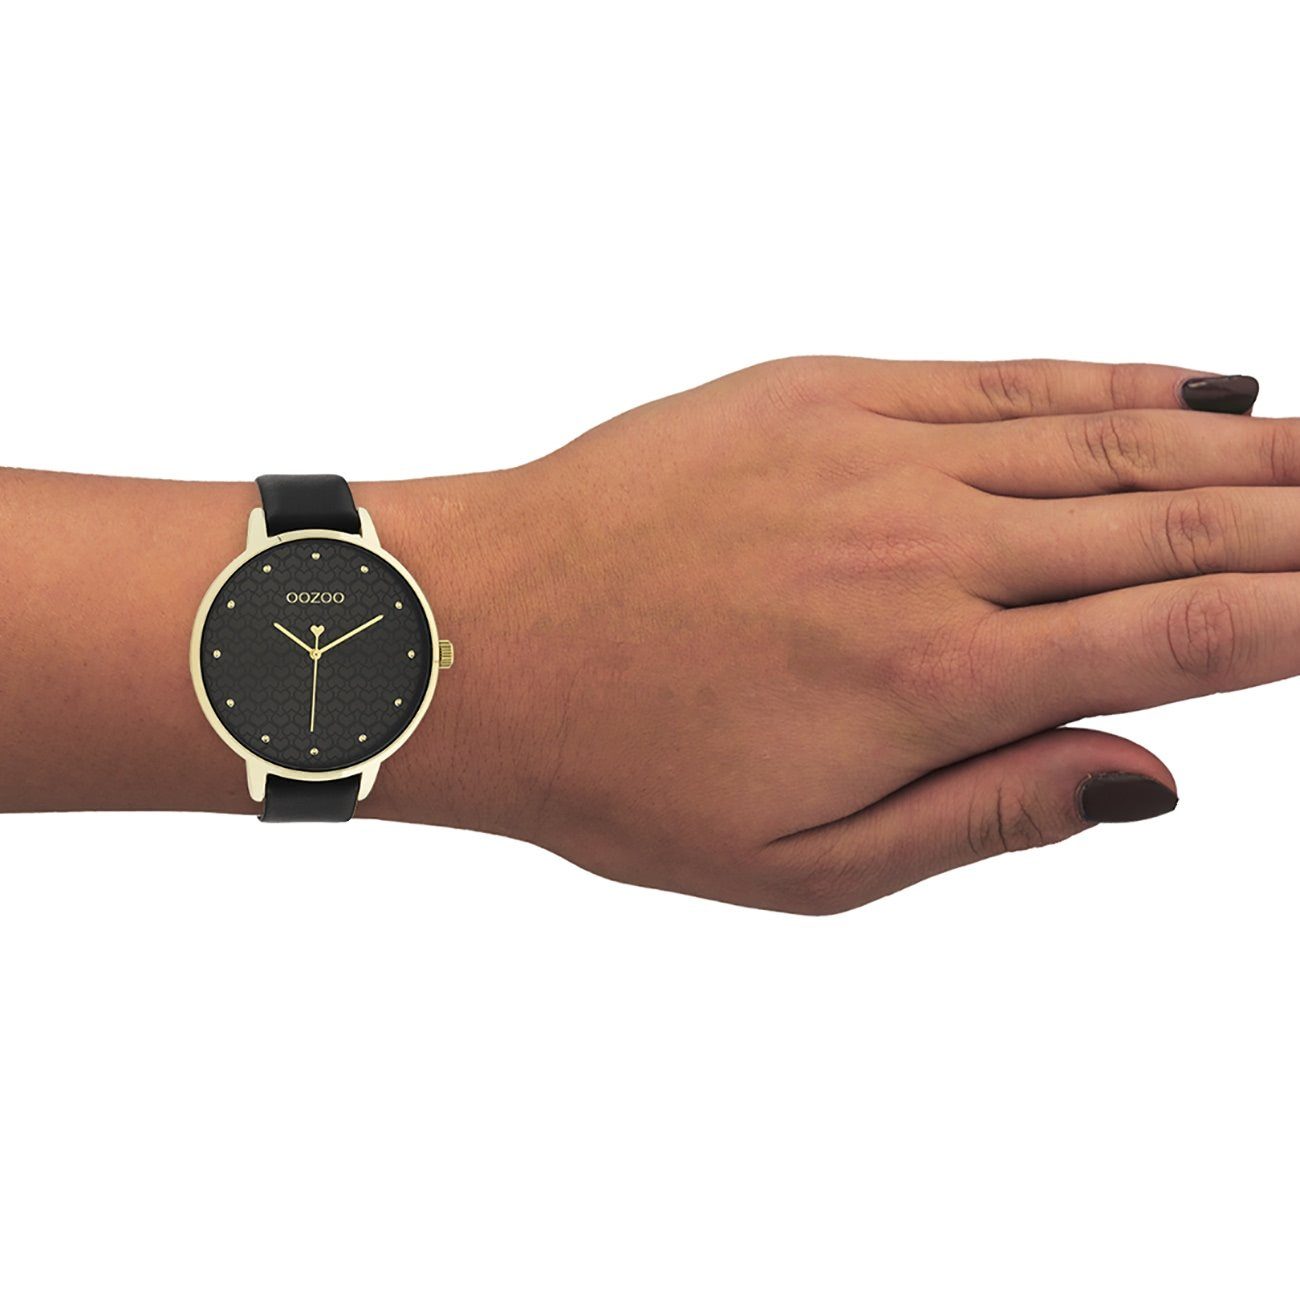 OOZOO extra Lederarmband, Damen Oozoo groß 48mm) Timepieces, Armbanduhr Fashion-Style Damenuhr Quarzuhr rund, (ca.